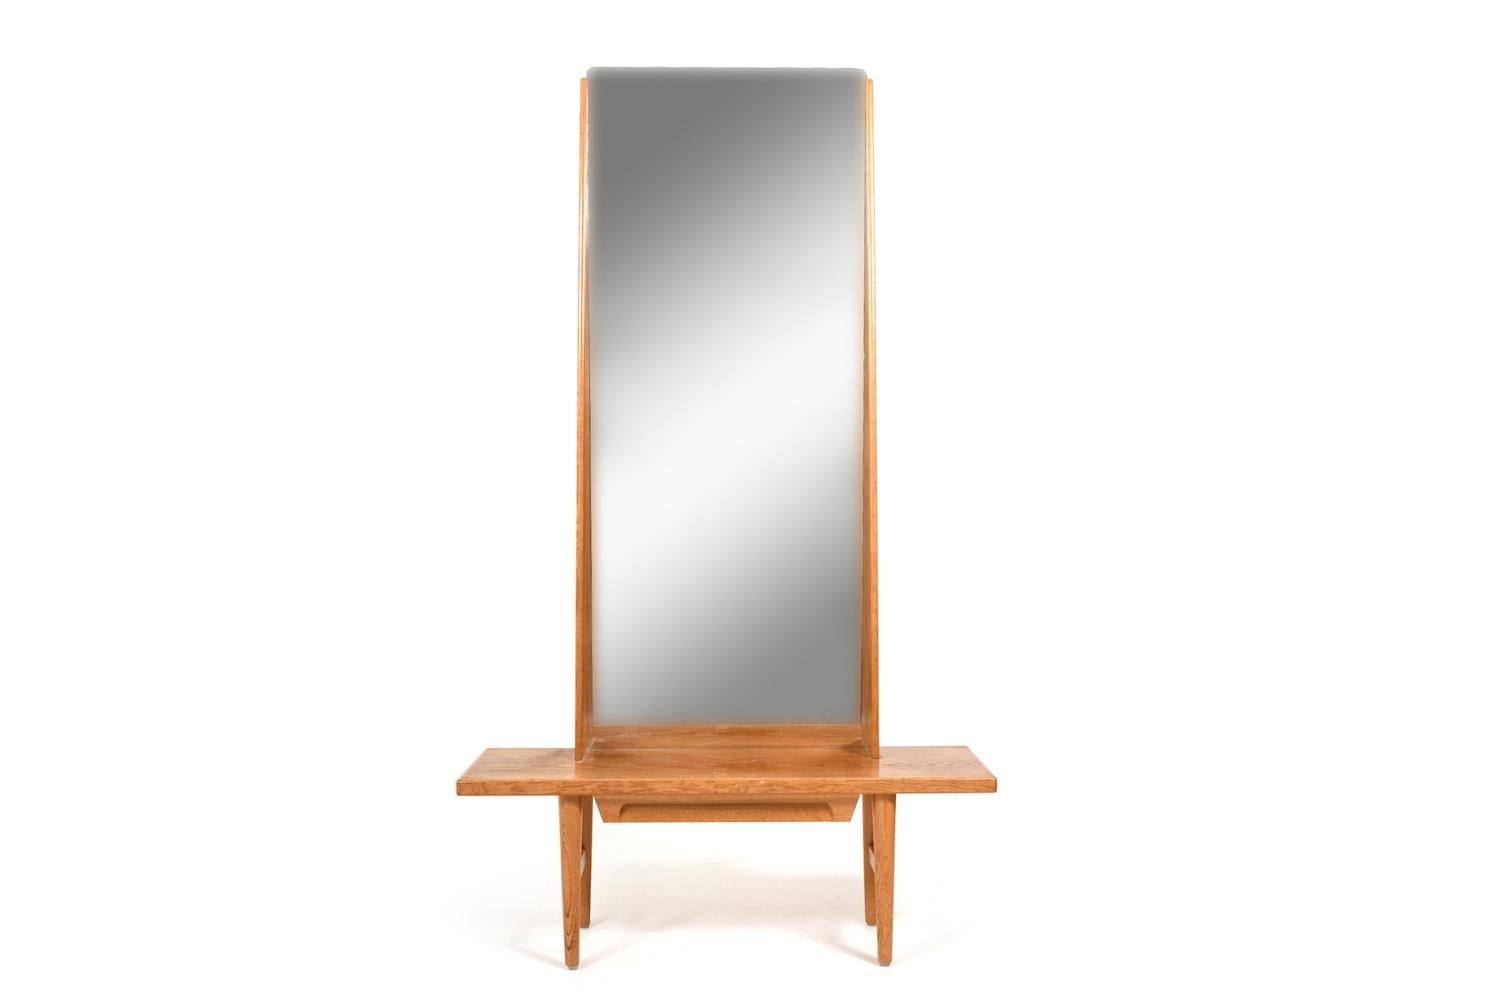 Fine mirror dresser / entry mirror by Kurt Østervig for Emmaboda Möbelfabrik Sweden 1960s. Made in oak. Original stand